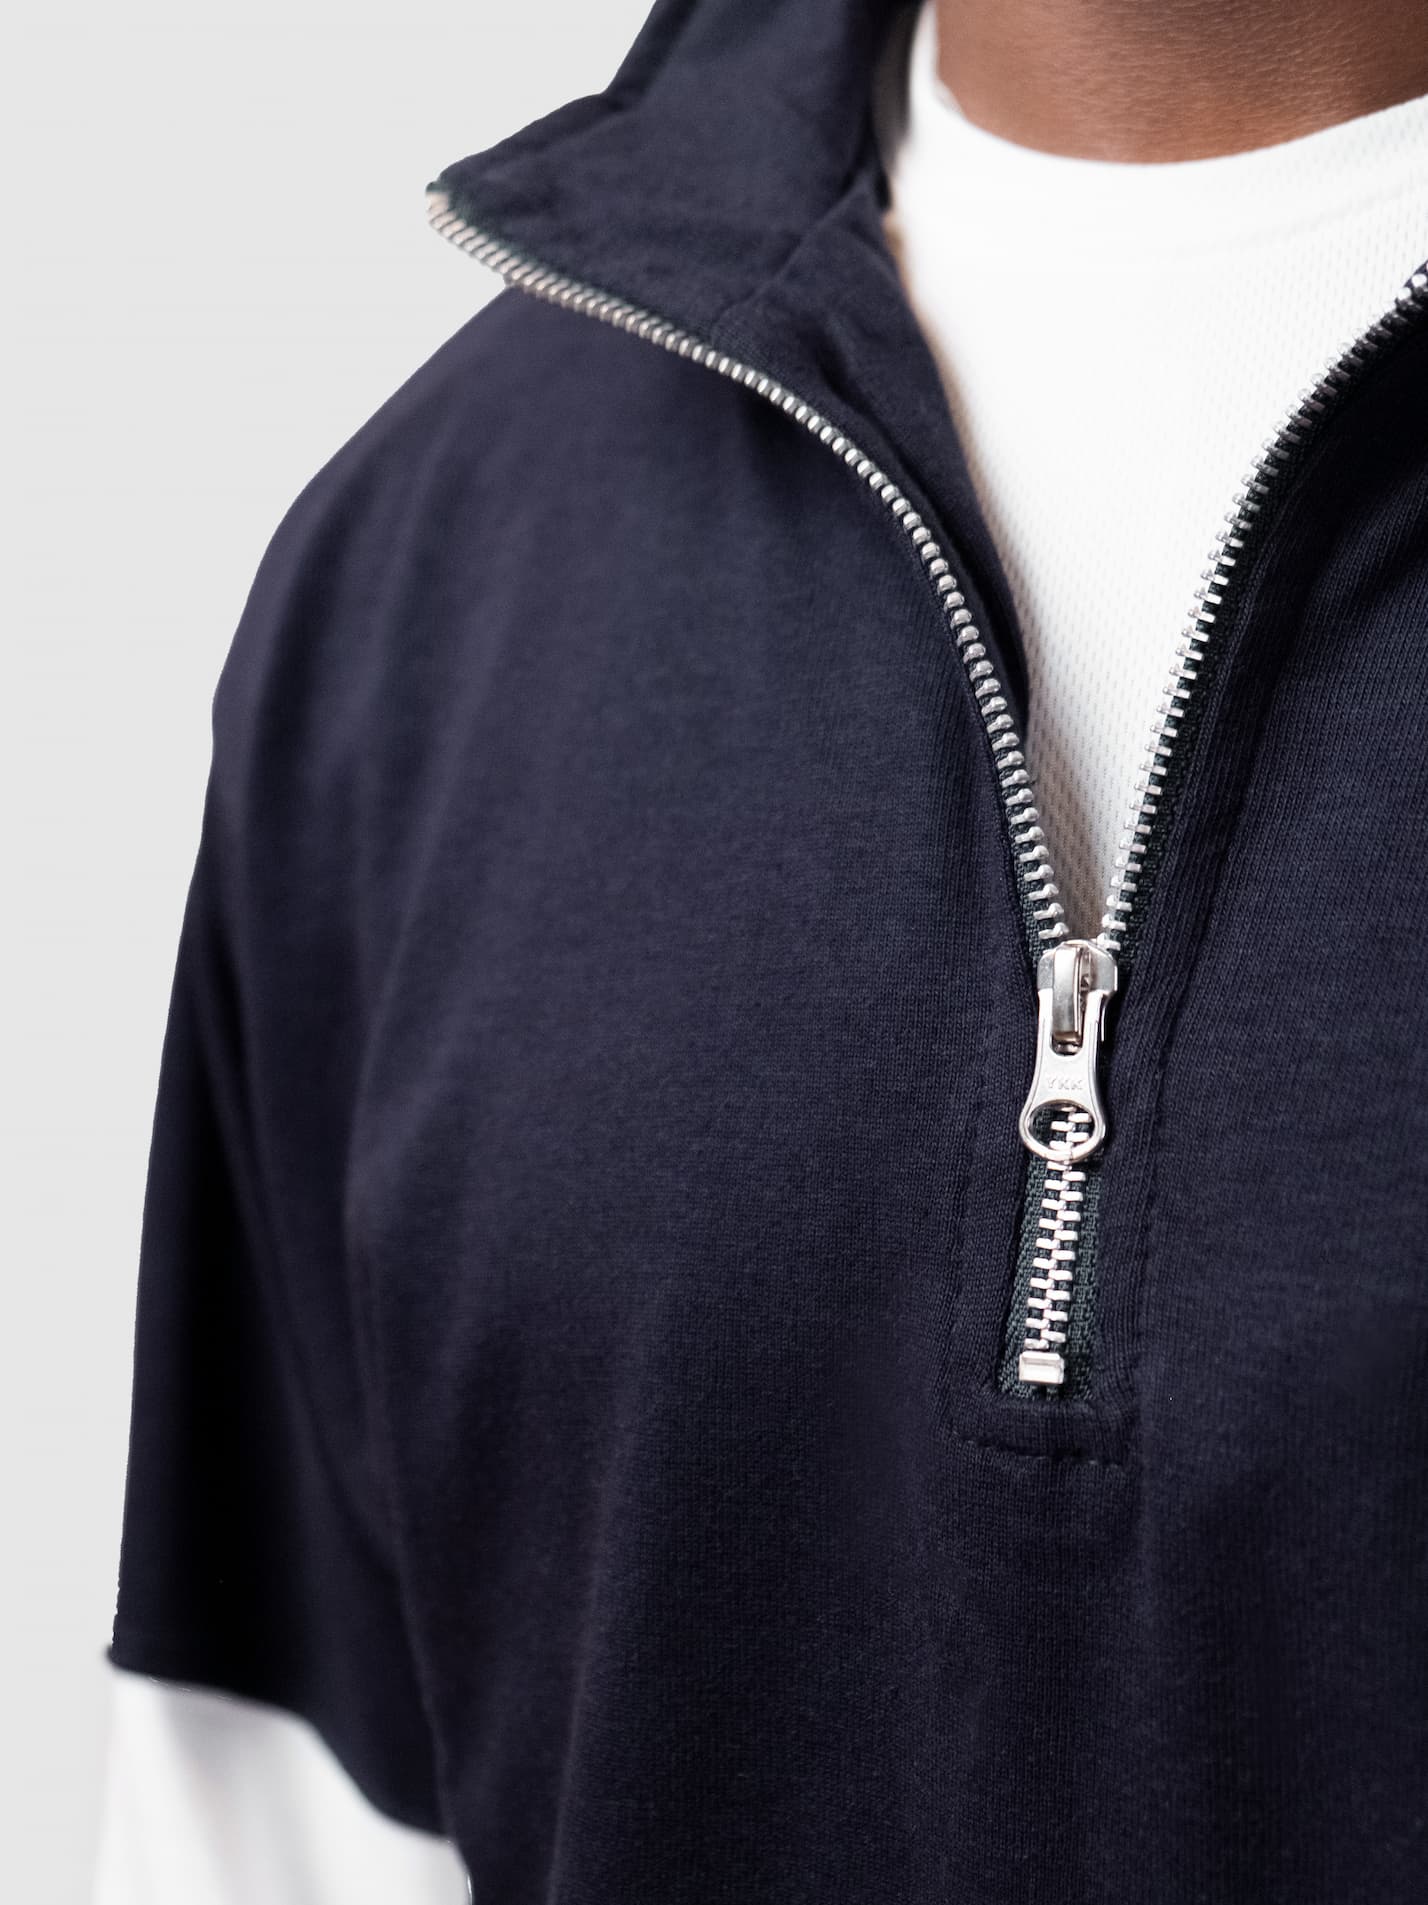 Downing College Cambridge JCR Unisex Panelled 1/4 Zip Sweatshirt